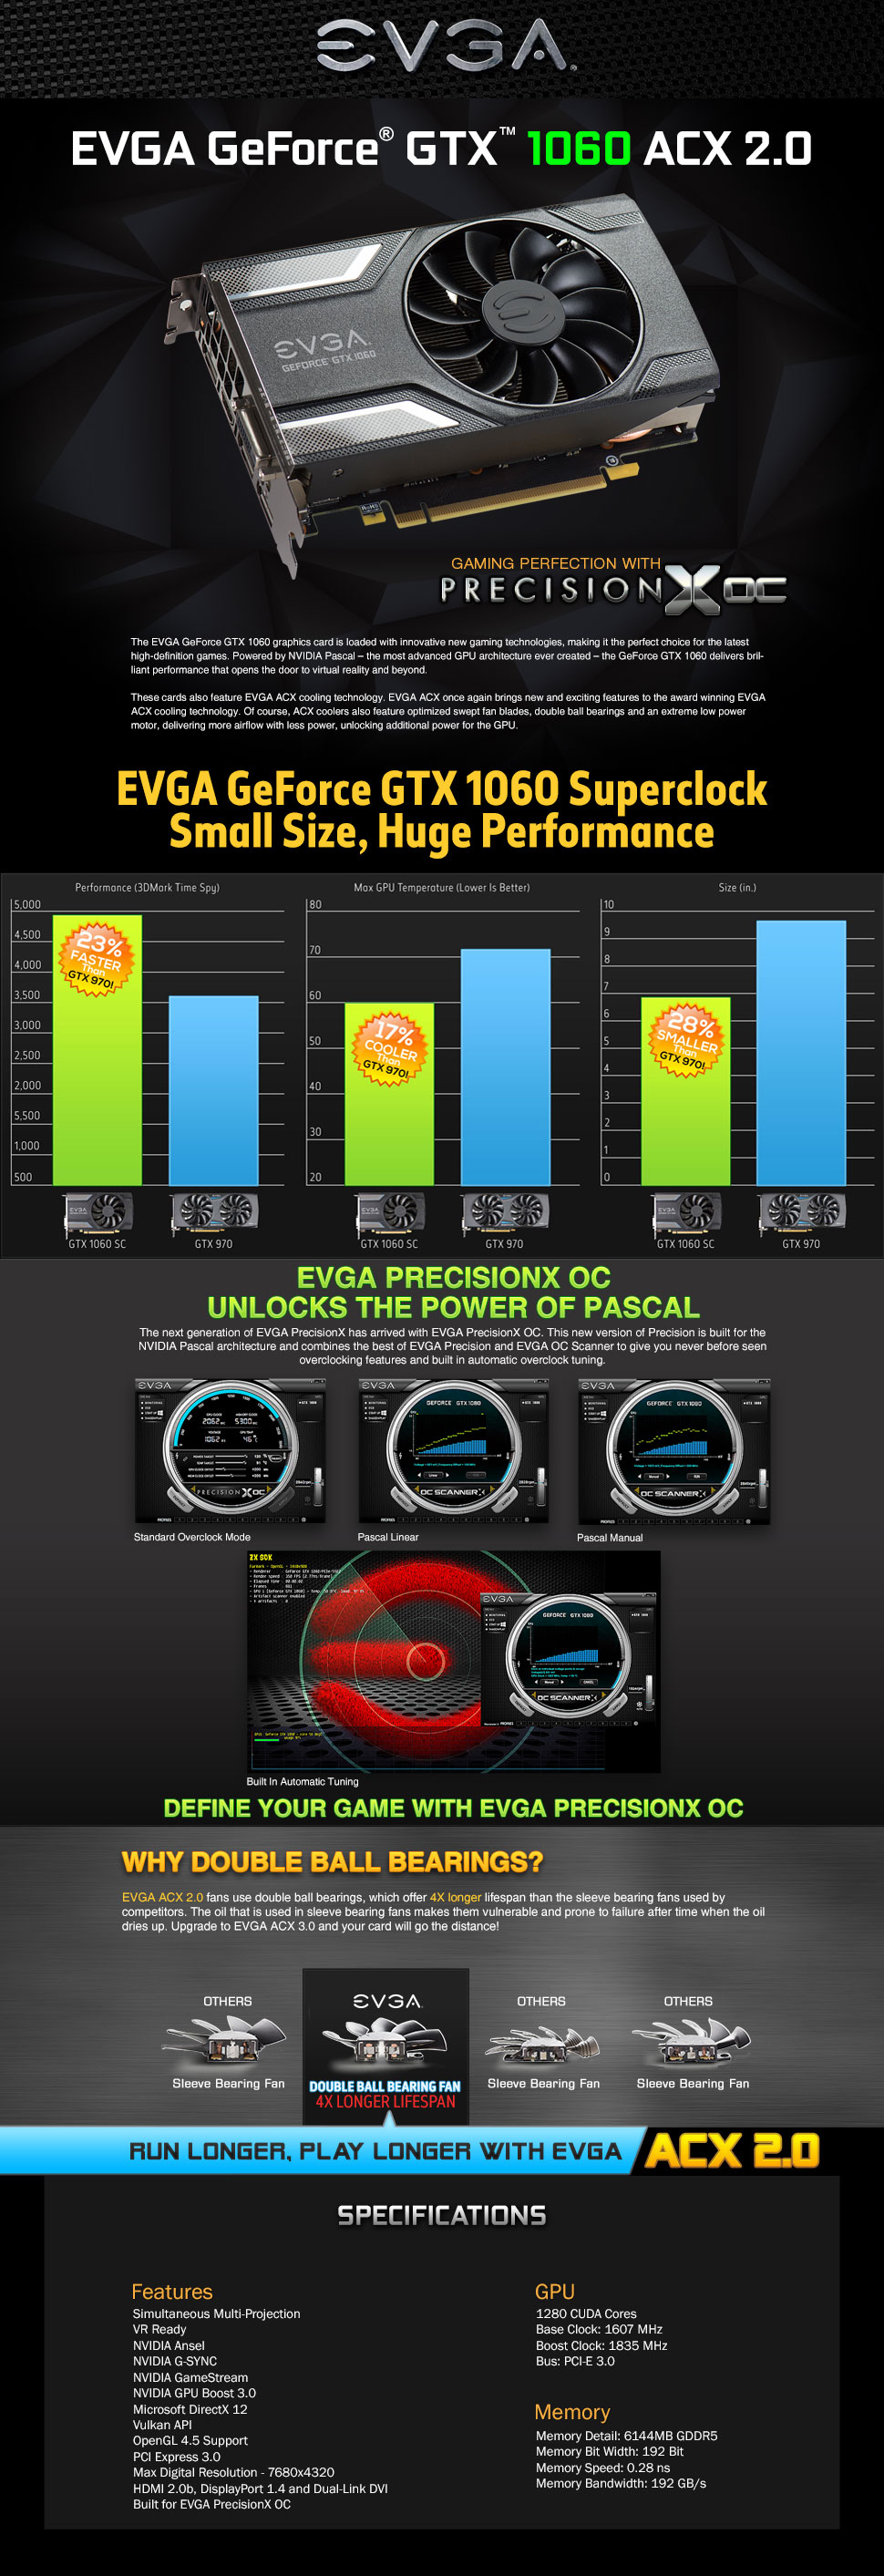 EVGA - Asia - Products - EVGA GeForce GTX 1060 SC GAMING, 06G-P4 